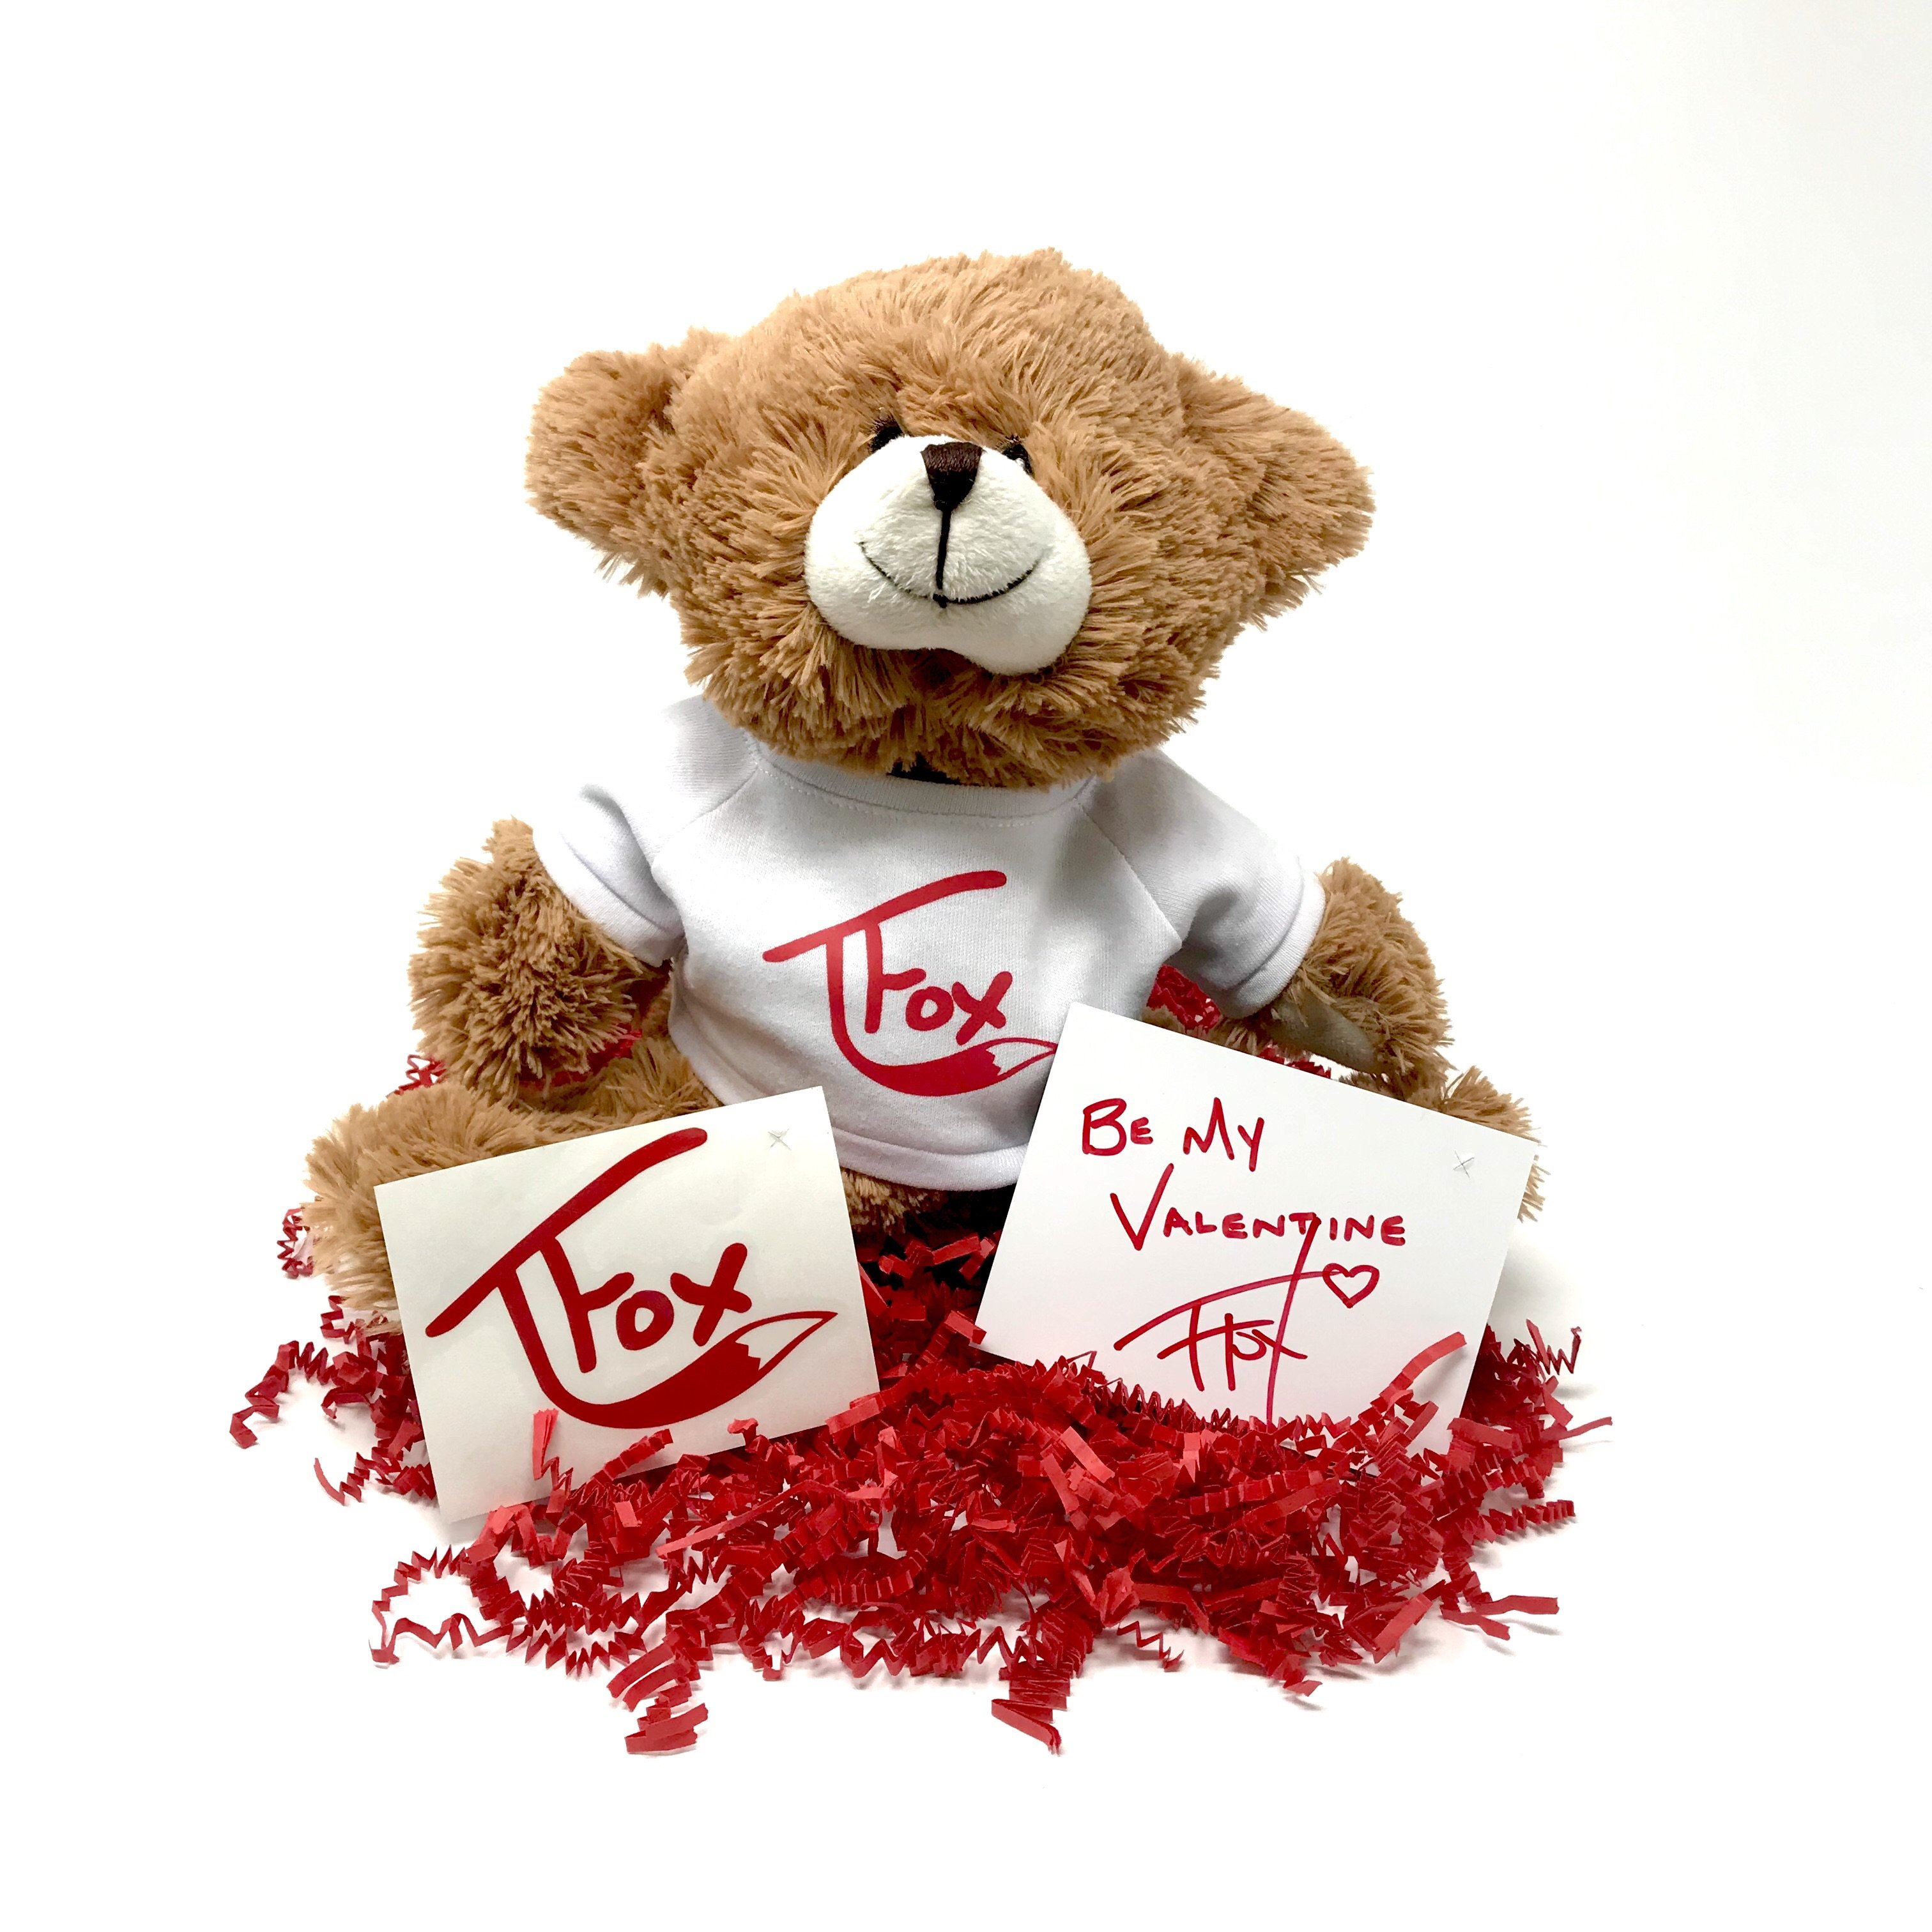 Teddy Bear - TFox Brand